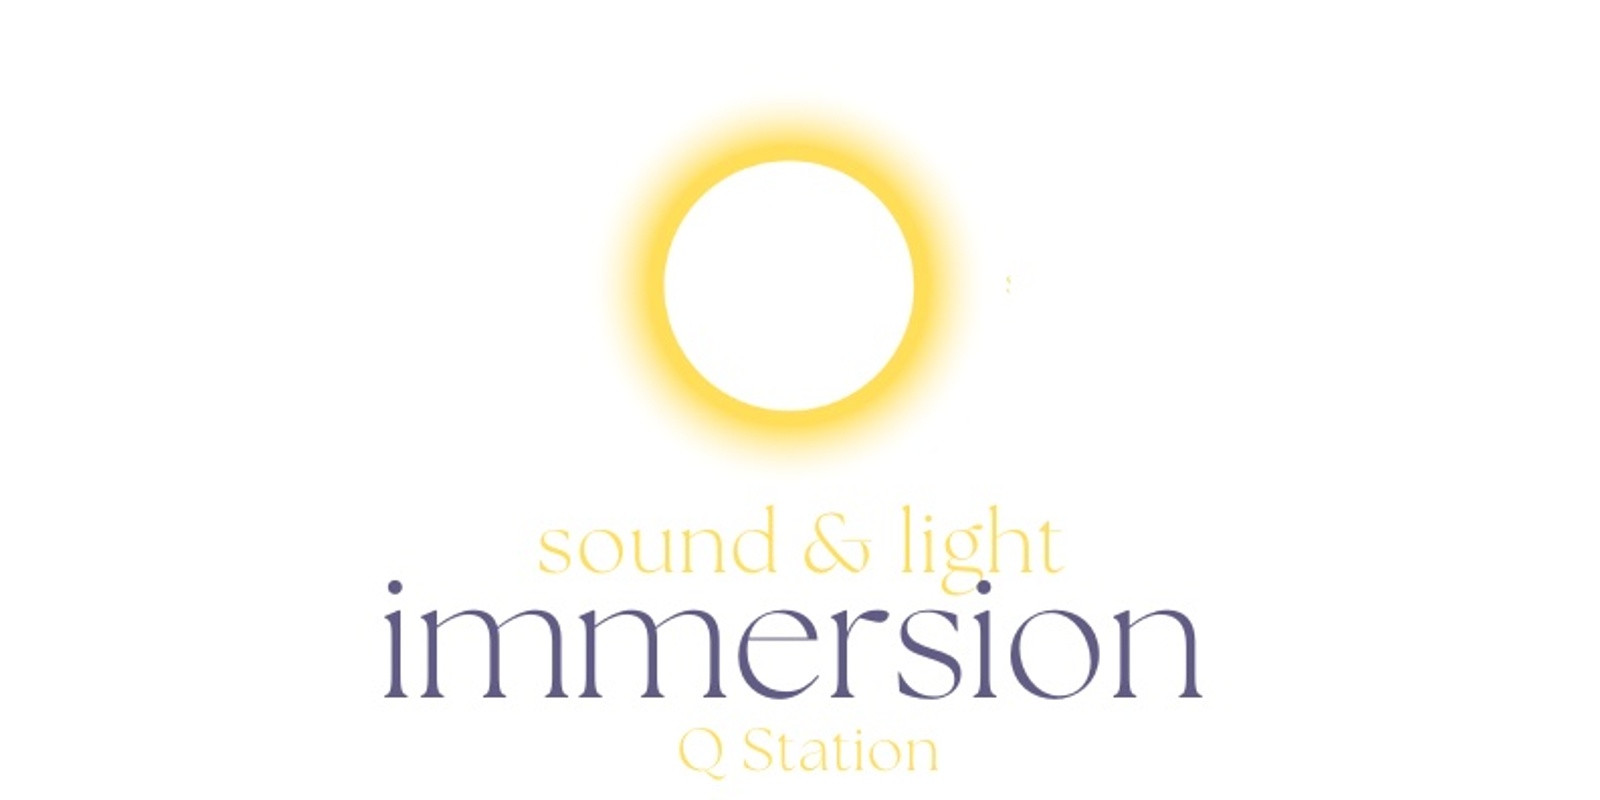 Banner image for Q Station Sound Immersion 